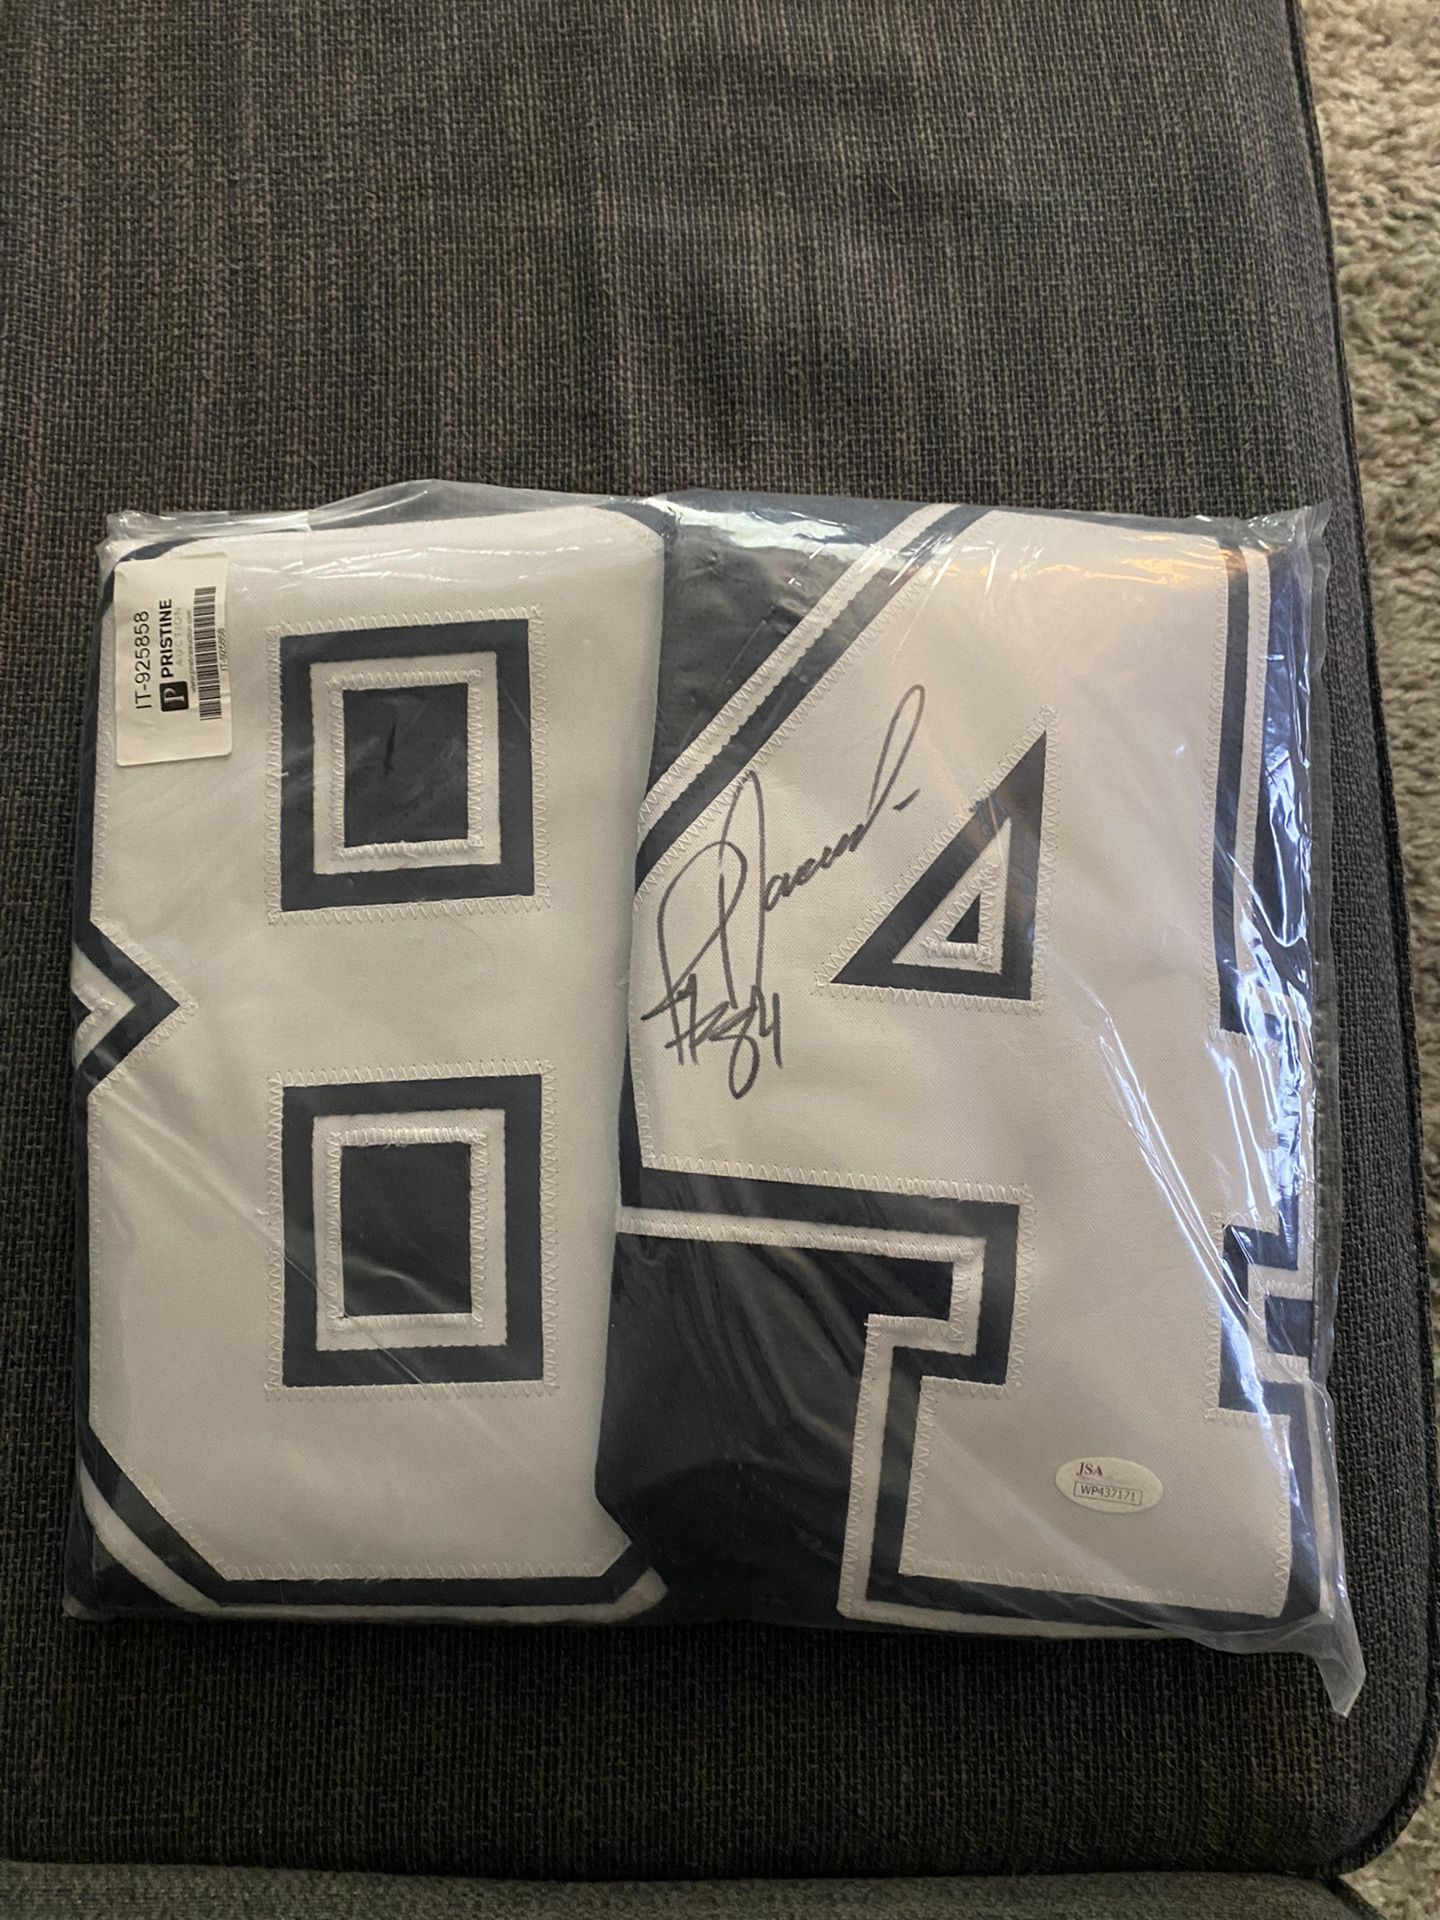 Autographed Dallas Cowboys jersey - Jay Novacek